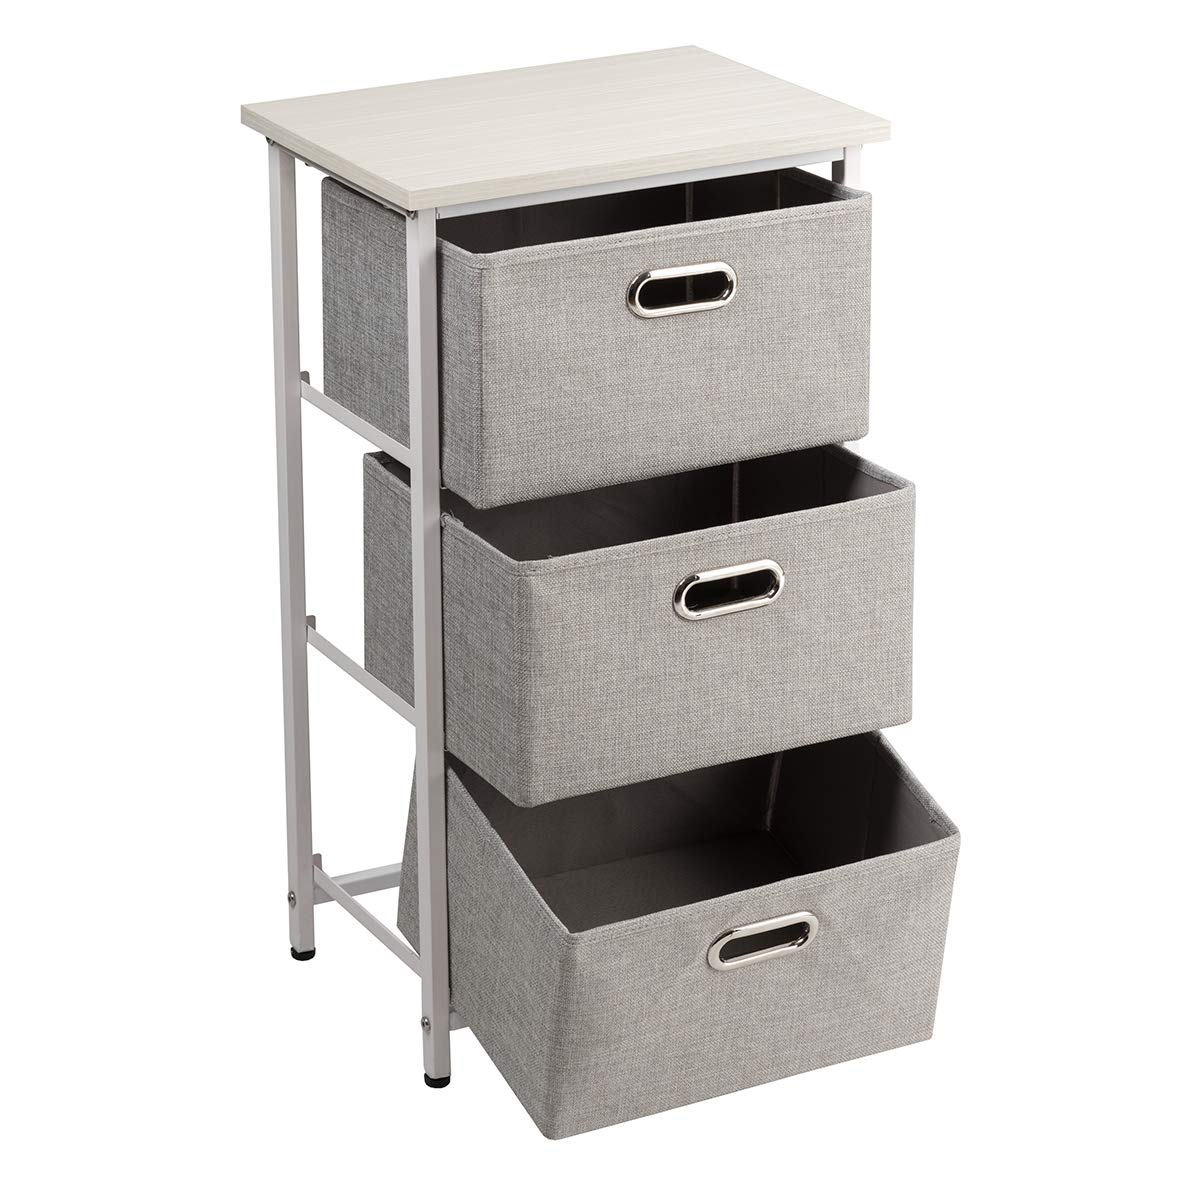 Giantex Vertical Dresser Storage W/ 3 Fabric Drawers,Easy Pull Fabric Bins,Steel Frame and Wood Top